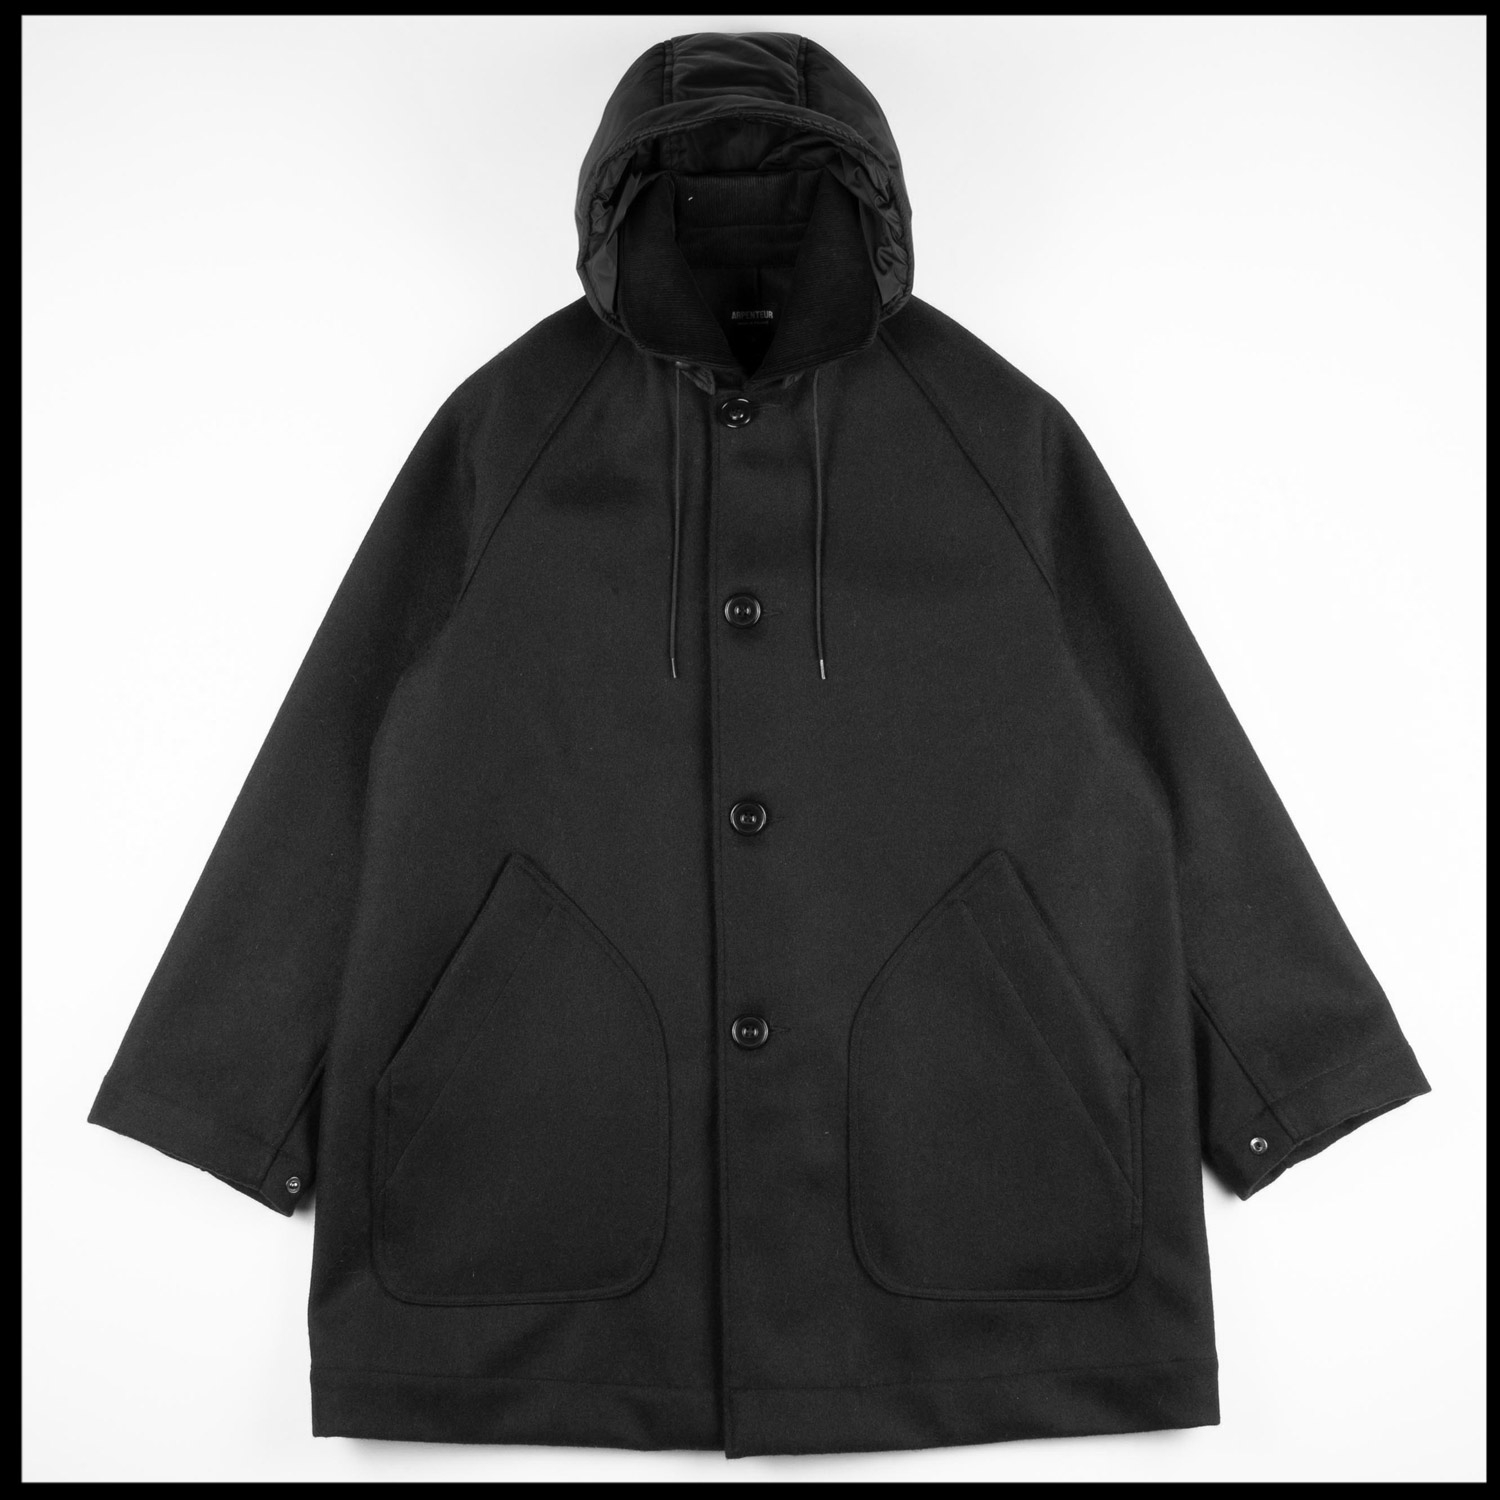 MEVI coat in Black color by Arpenteur